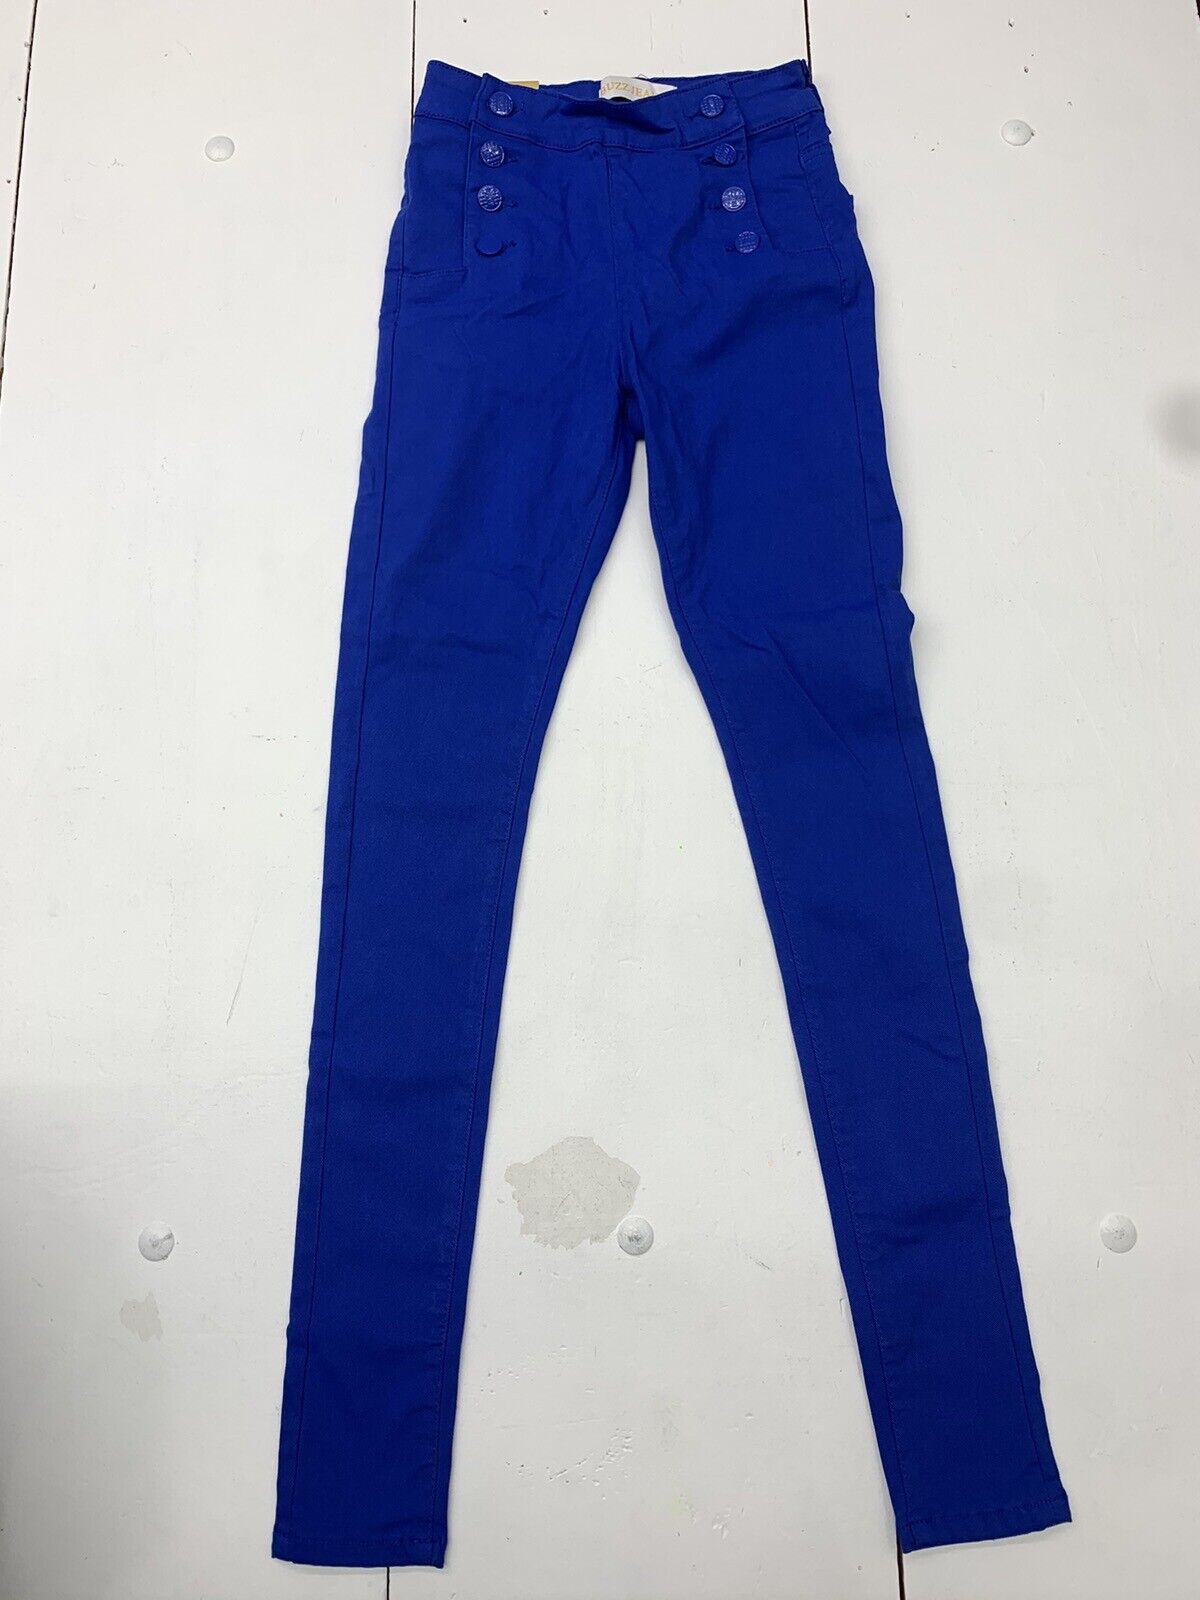 Buzz Jeans Womens Royal Blue Denim Jeans Size Small